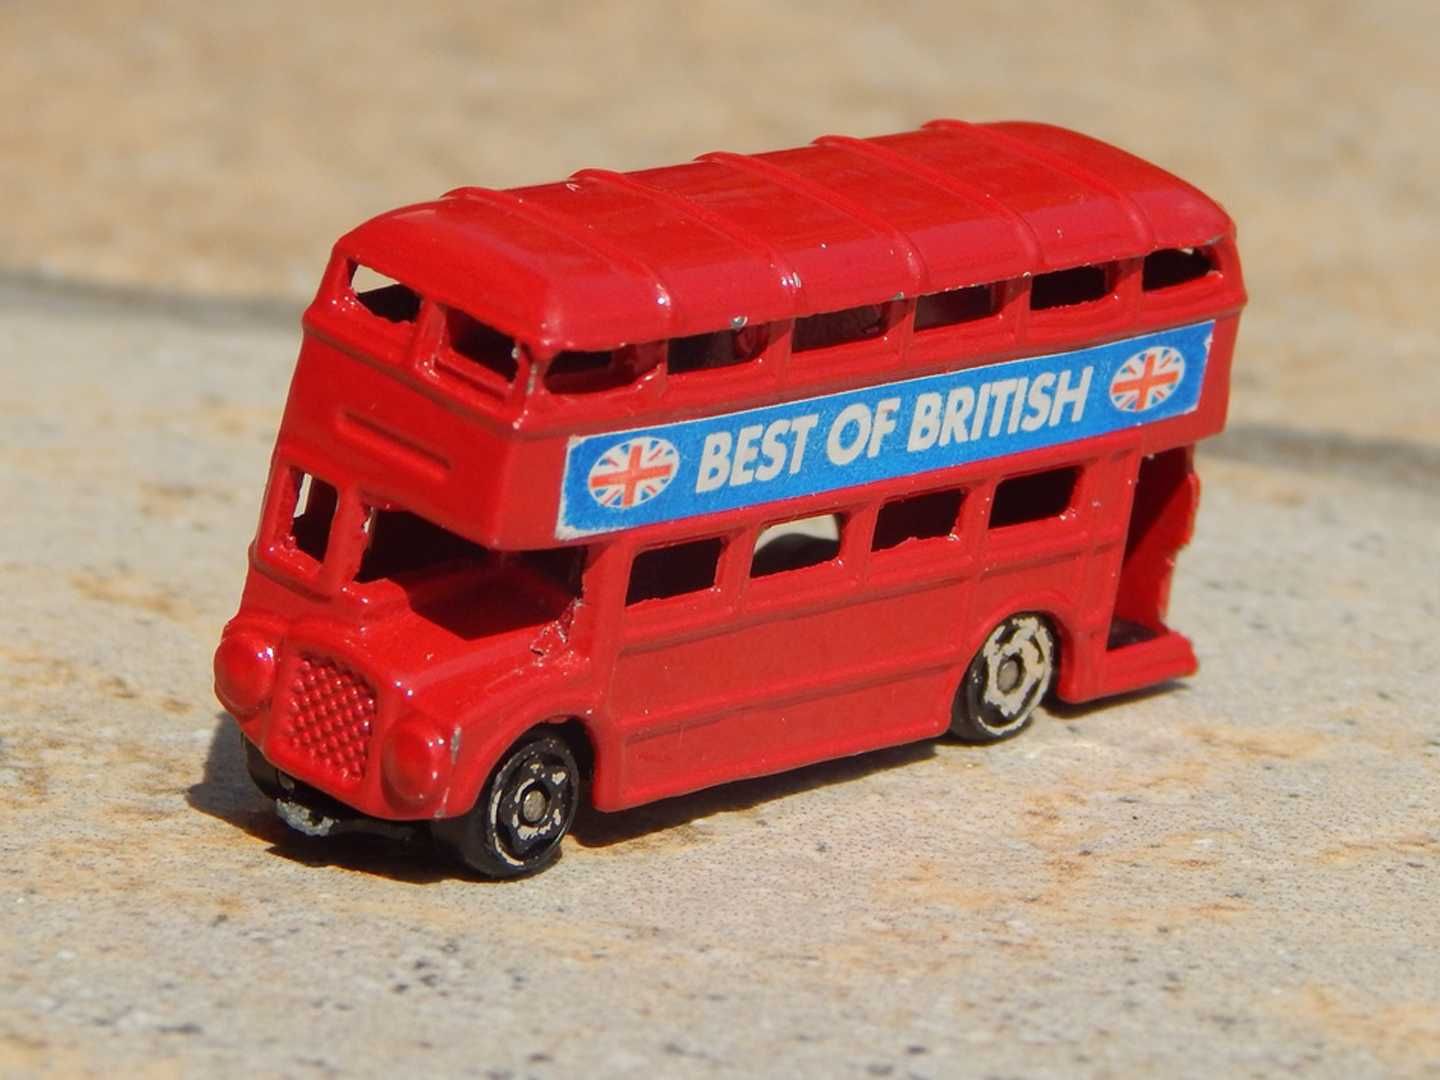 Macheta metalica jucarie autobuz londonez scara 1:120